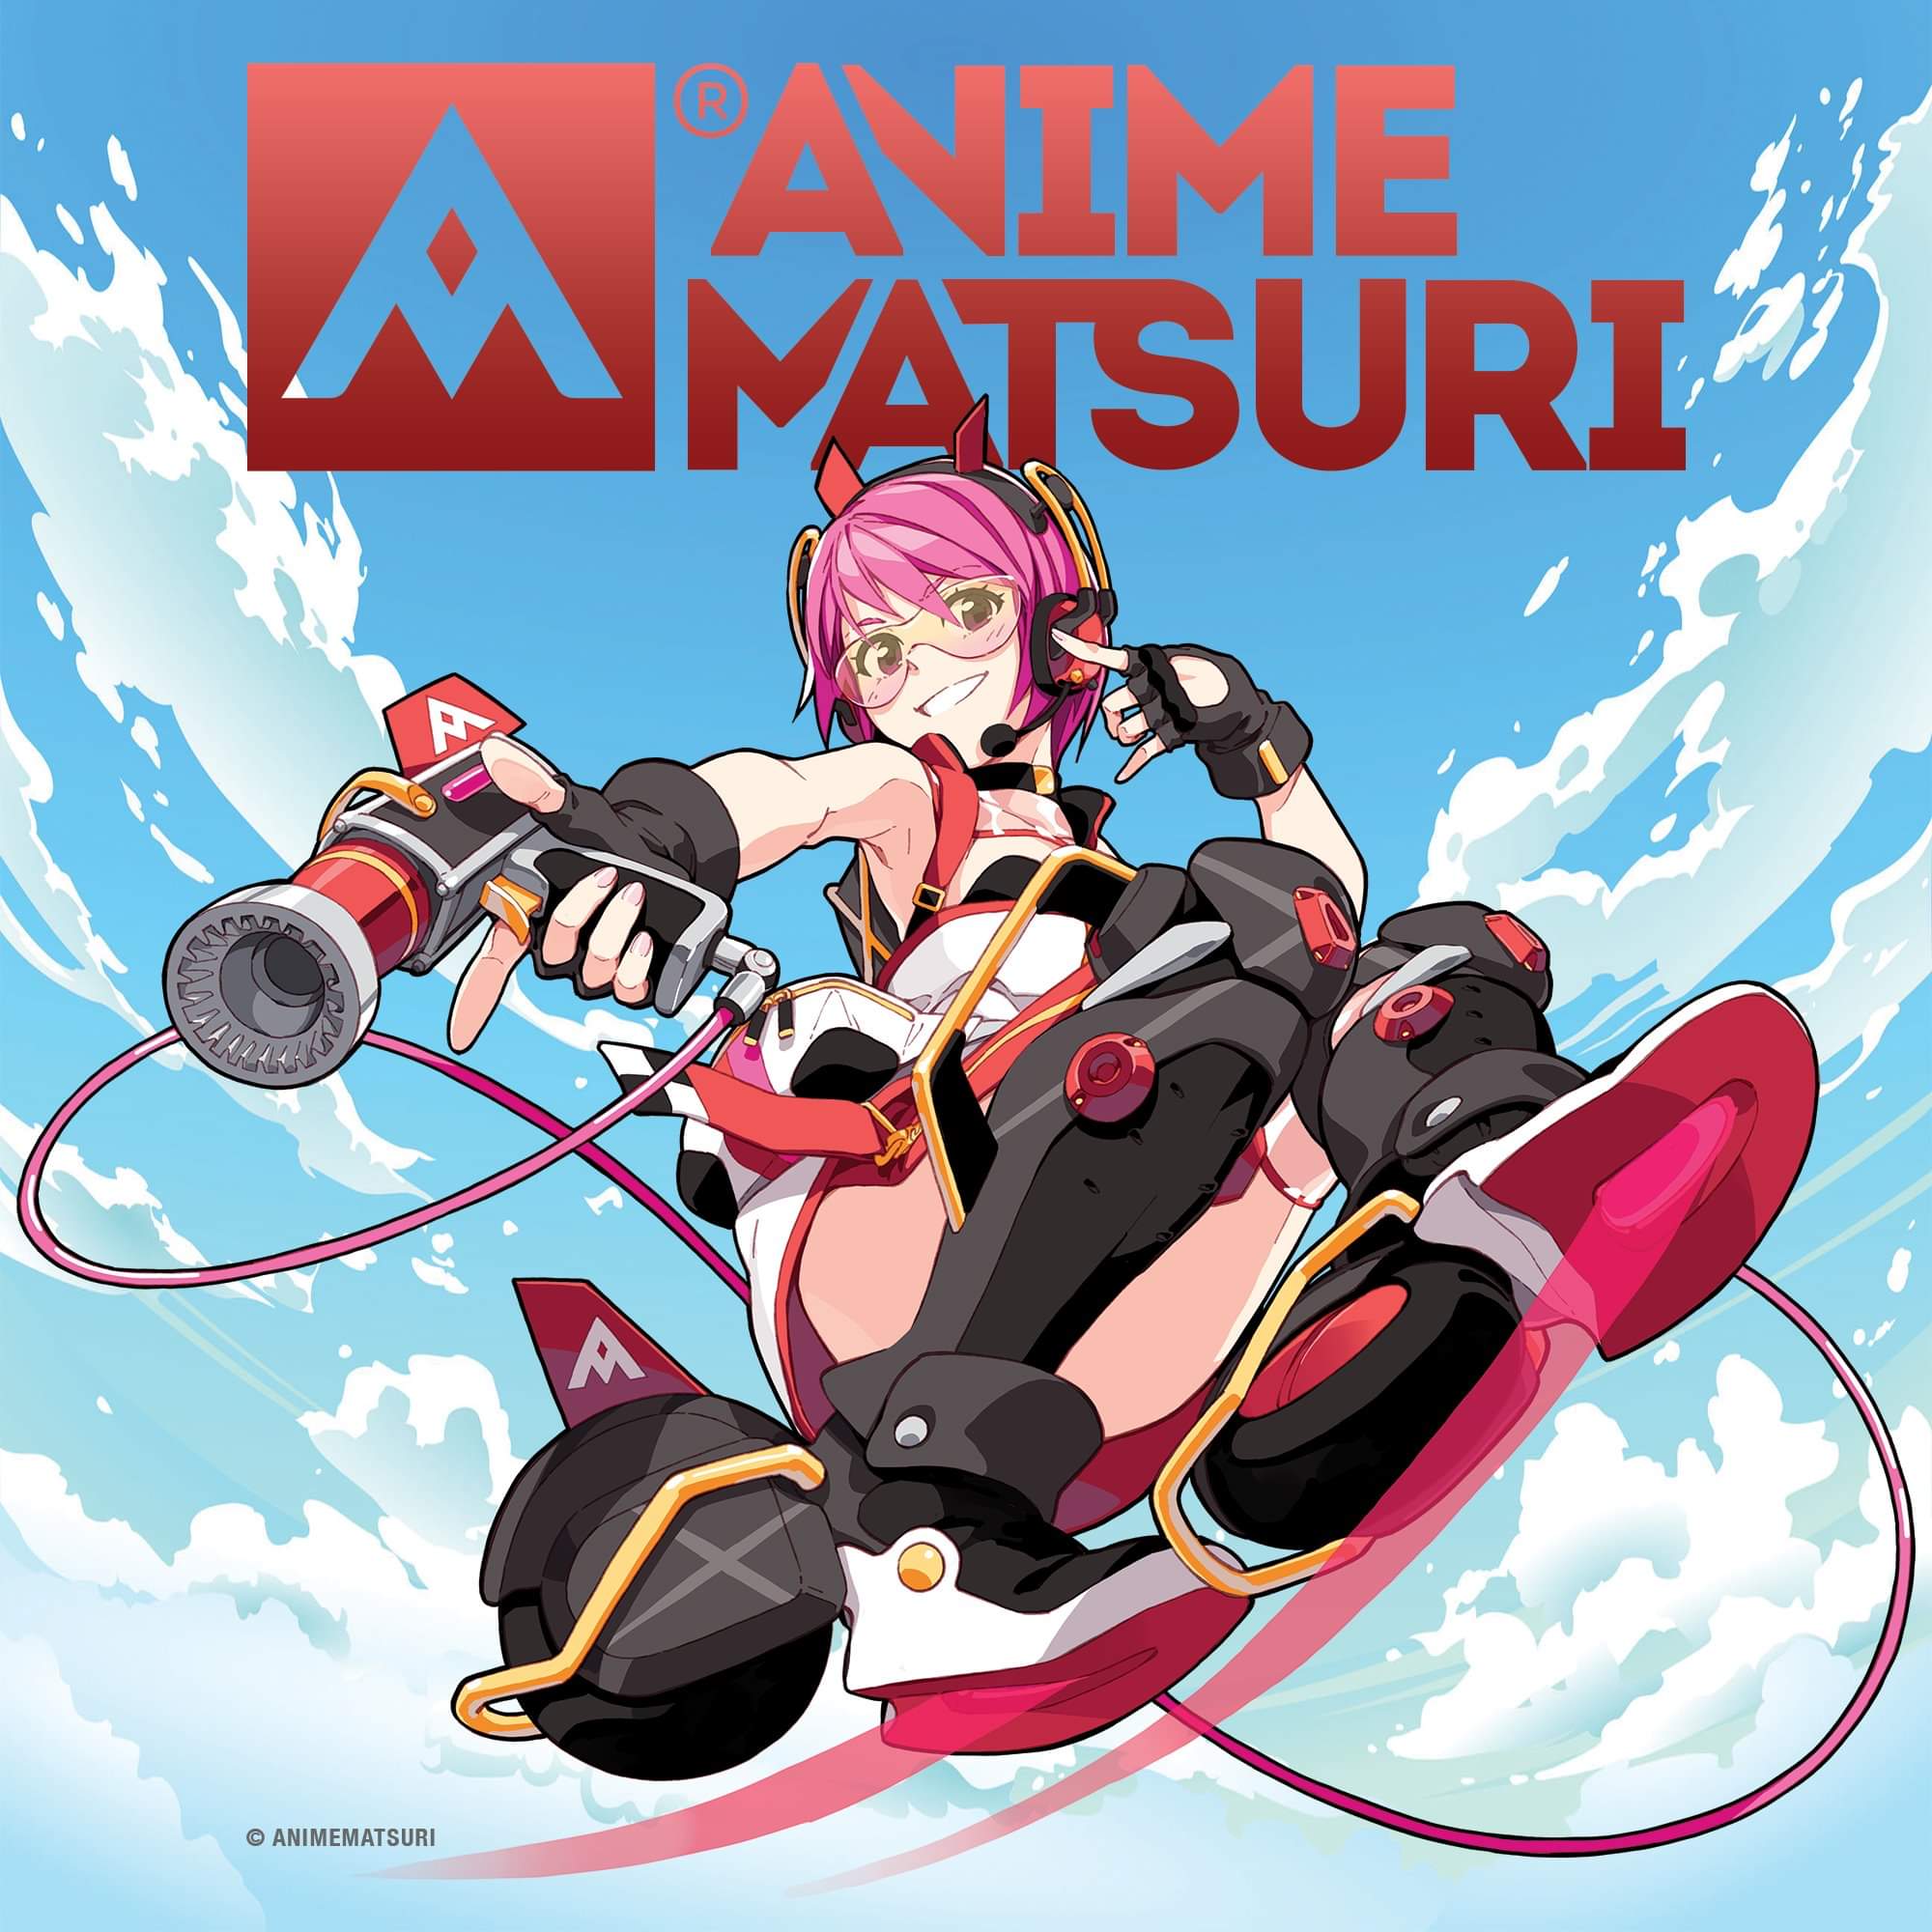 Anime Matsuri Attendees Now A Part Of Japan's Super GT Circuit - Anime  Matsuri 2021